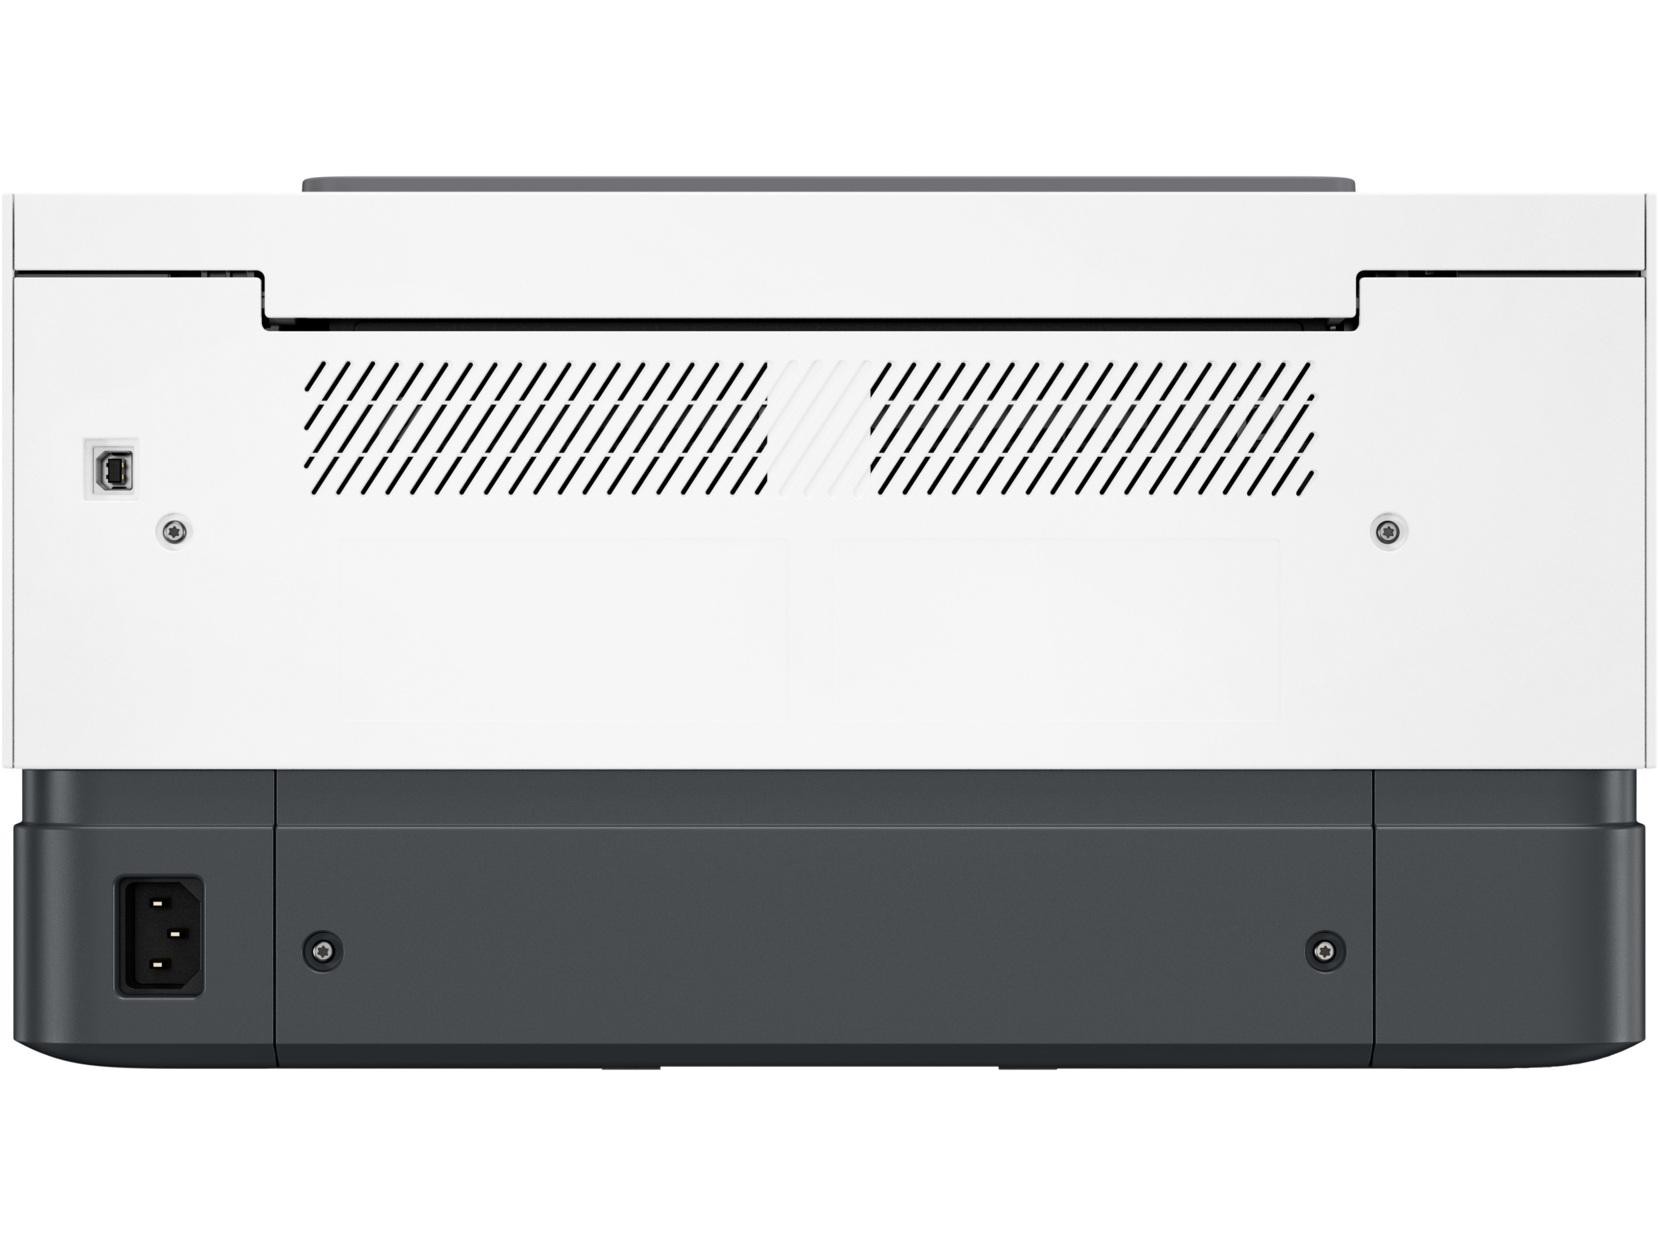 Принтер HP Neverstop Laser 1000w (4RY23A) (лазерное монохромное, A4, 600x600 dpi, 20ppm, Wi-Fi, USB)